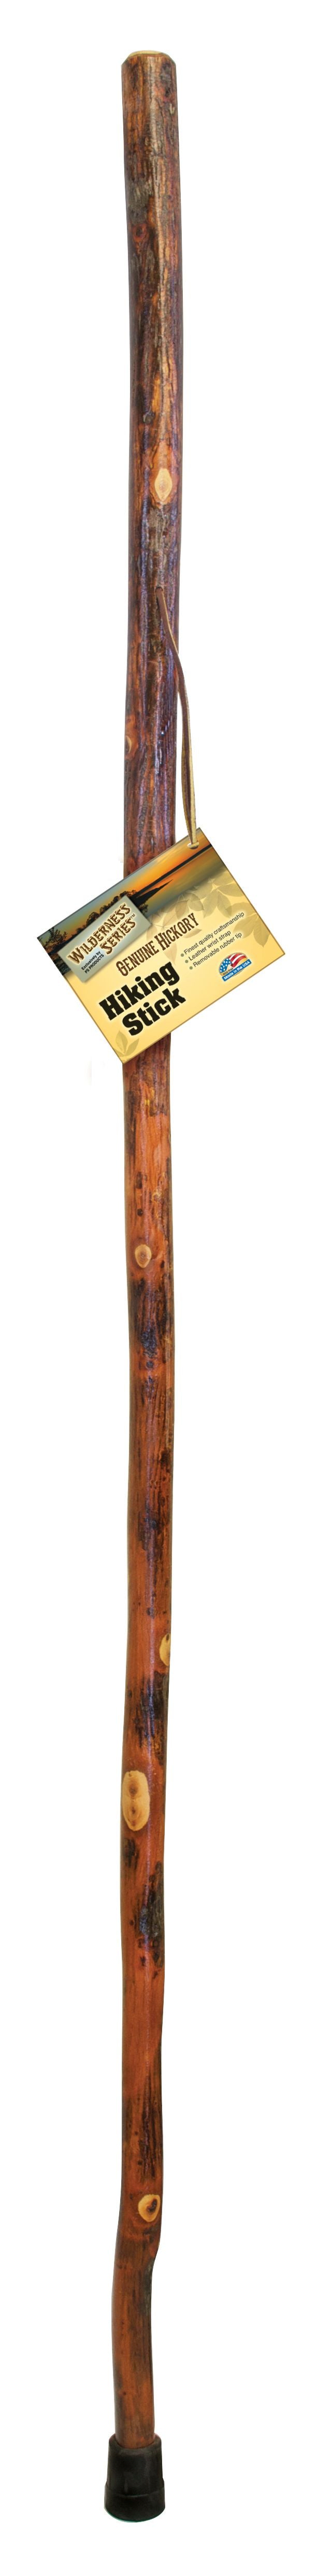 Hickory Walking Stick